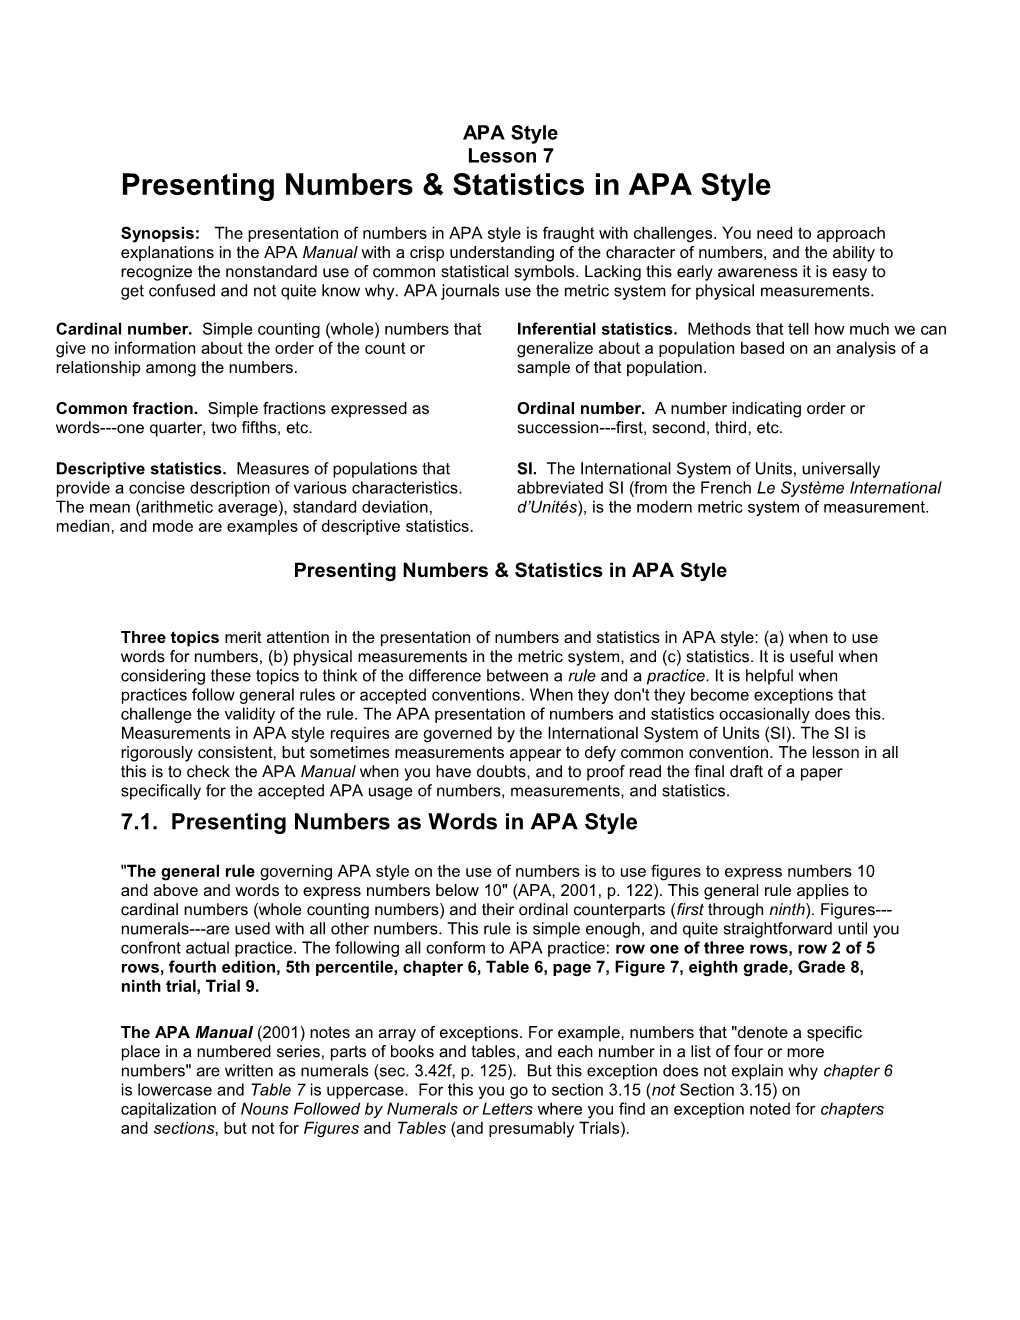 Presenting Numbers & Statistics in APA Style